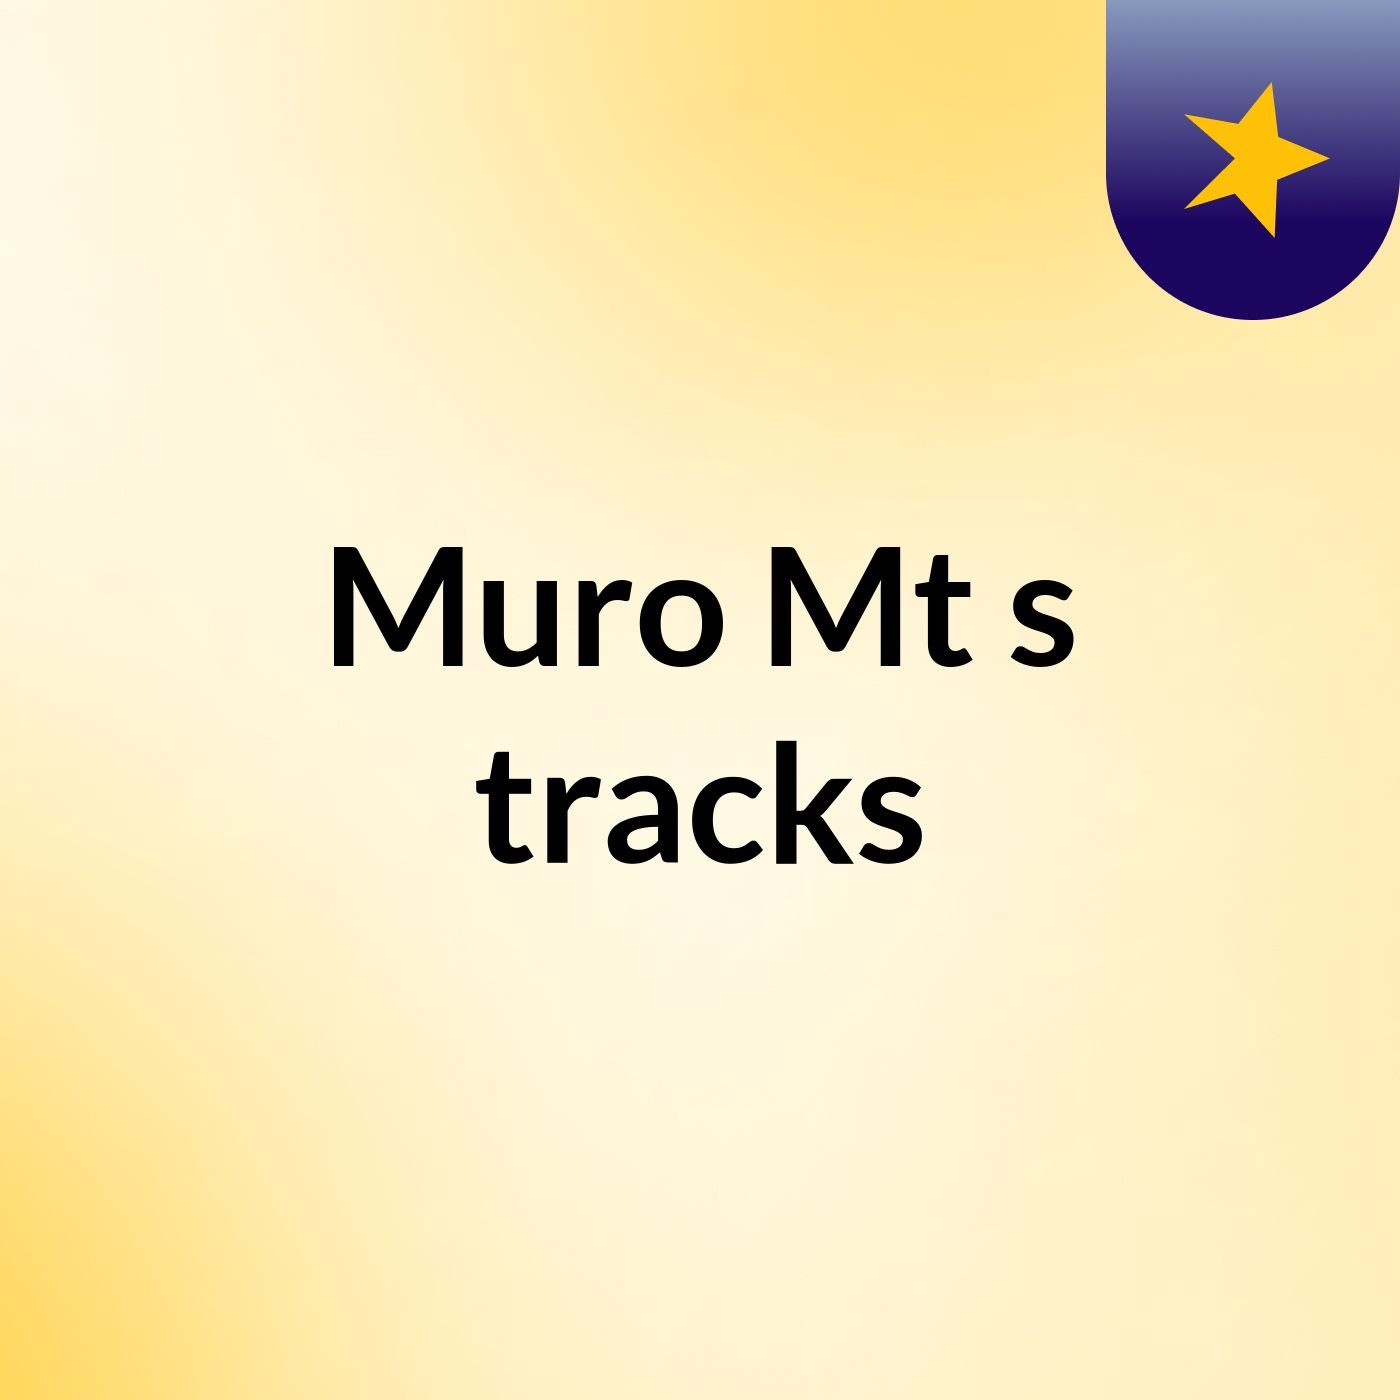 Muro Mt's tracks